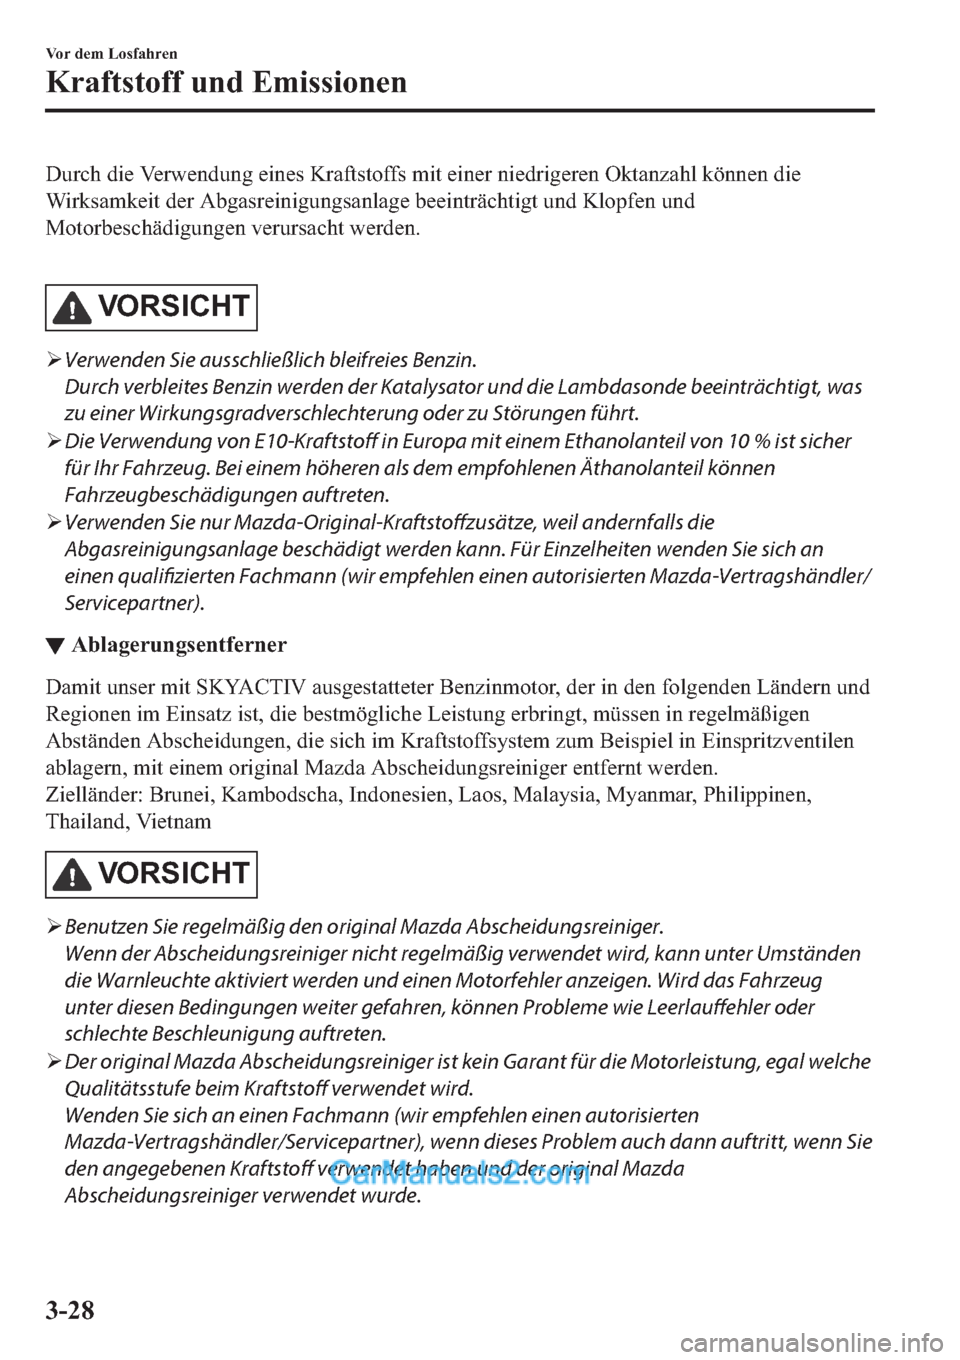 MAZDA MODEL 2 2019  Betriebsanleitung (in German) ��X�U�F�K��G�L�H��9�H�U�Z�H�Q�G�X�Q�J��H�L�Q�H�V��.�U�D�I�W�V�W�R�I�I�V��P�L�W��H�L�Q�H�U��Q�L�H�G�U�L�J�H�U�H�Q��2�N�W�D�Q�]�D�K�O��N�|�Q�Q�H�Q��G�L�H
�:�L�U�N�V�D�P�N�H�L�W��G�H�U��$�E�